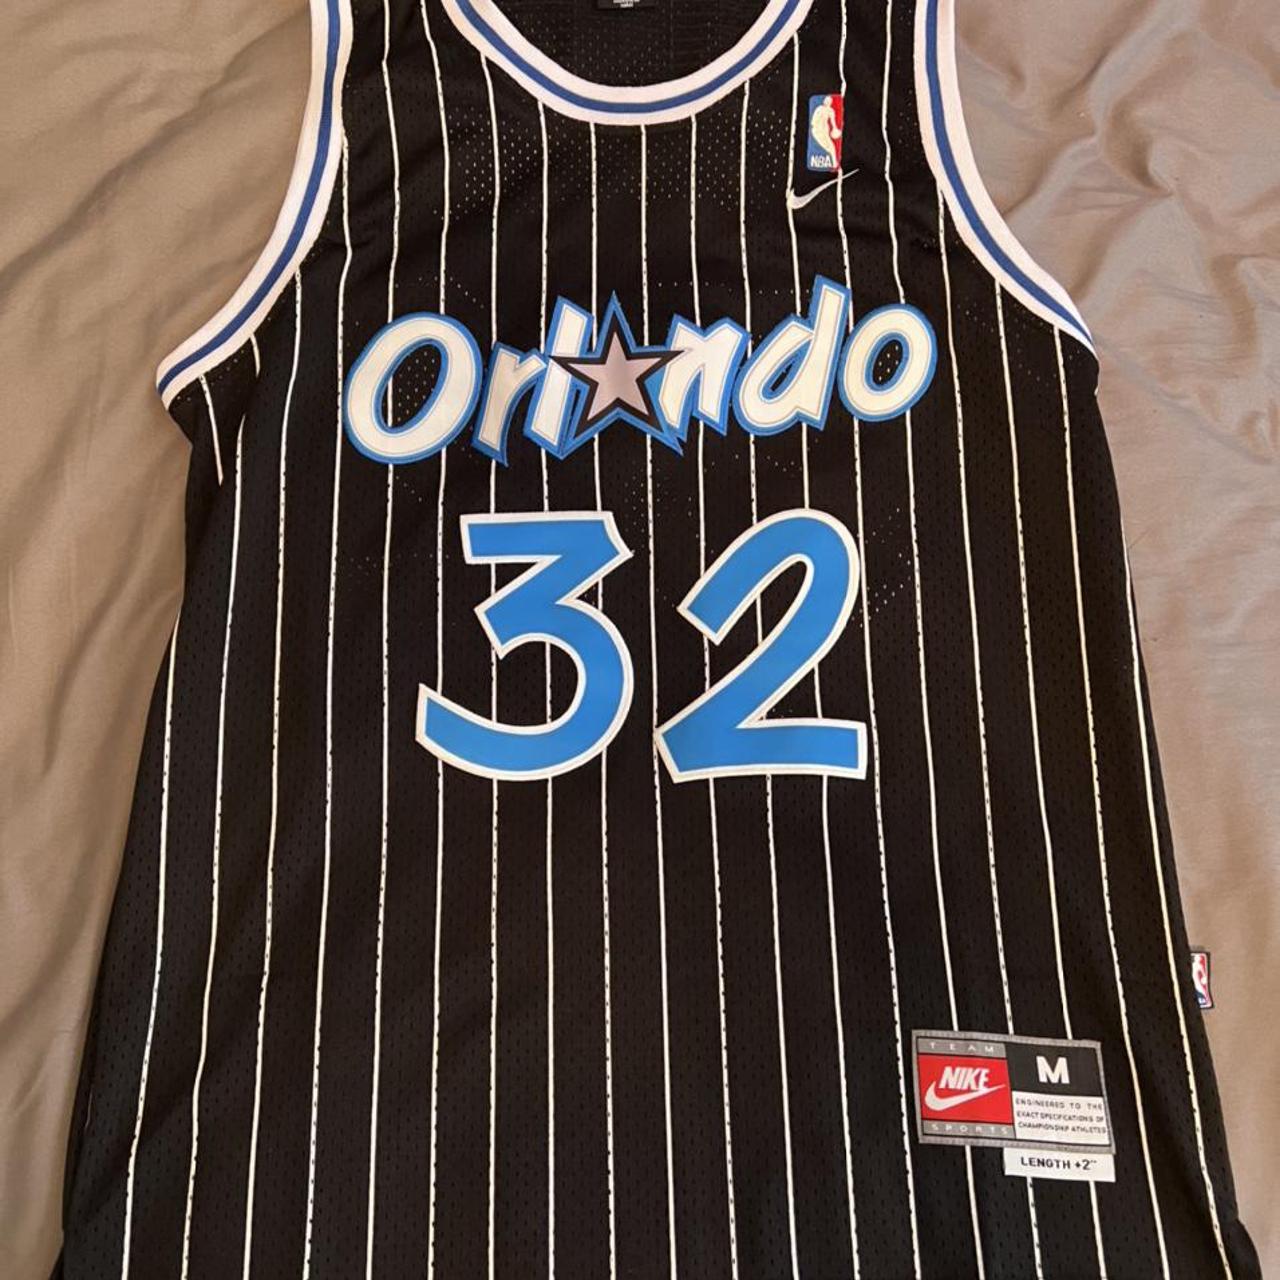 Orlando Magic NBA basketball jersey Number 5 - Depop